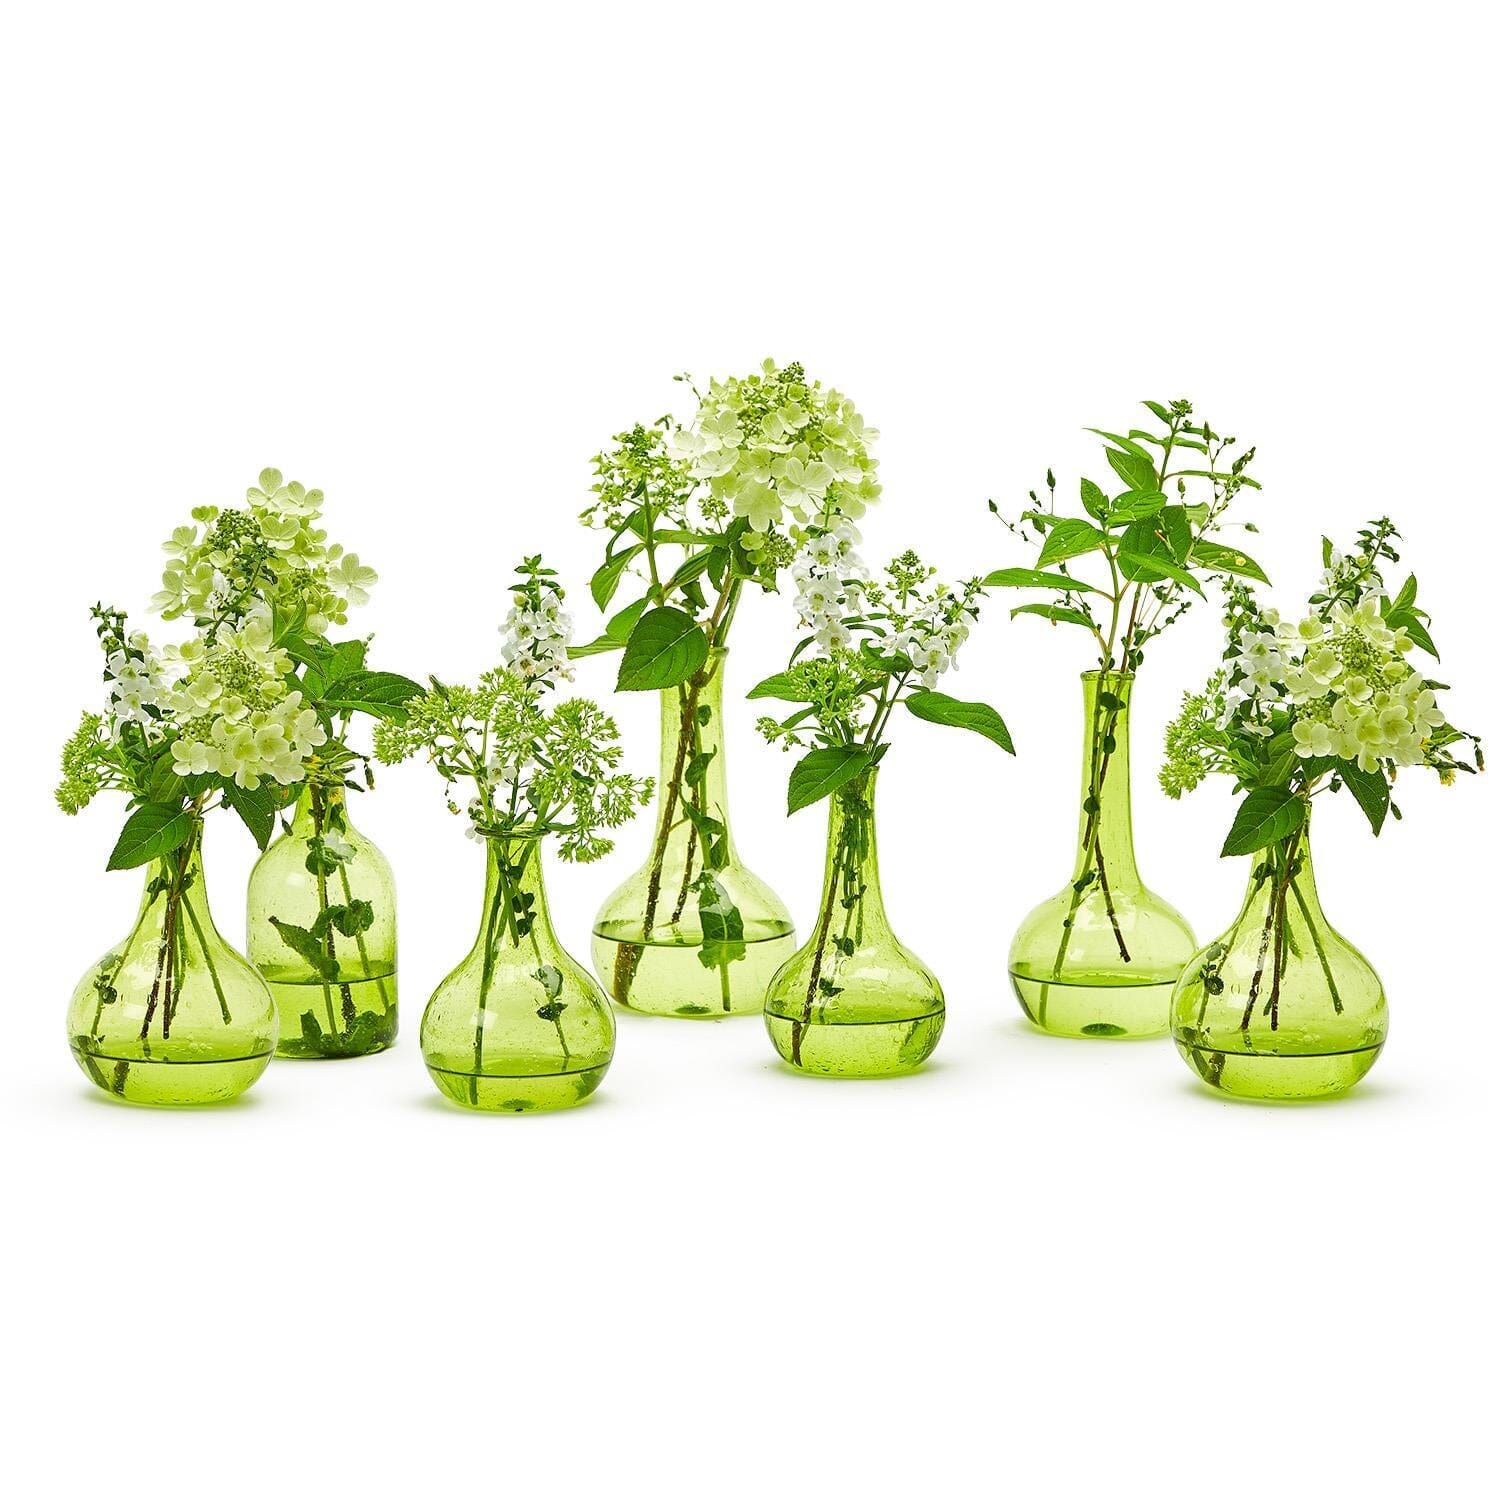 Recycled Glass Decorative Bottles, Set of 7 Vases, Planters & Jars 